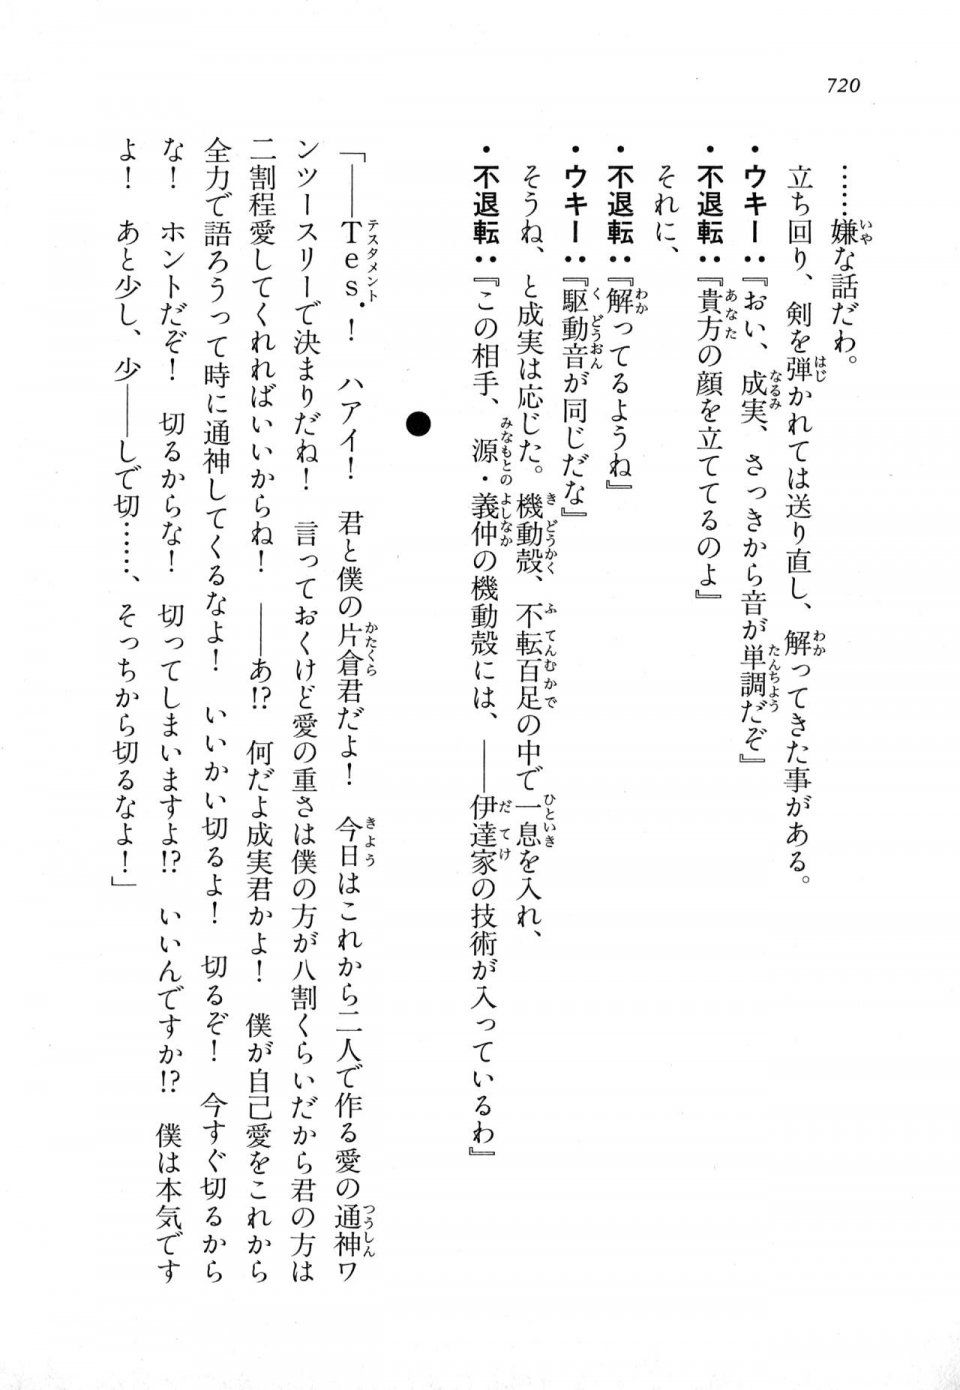 Kyoukai Senjou no Horizon LN Vol 18(7C) Part 2 - Photo #160